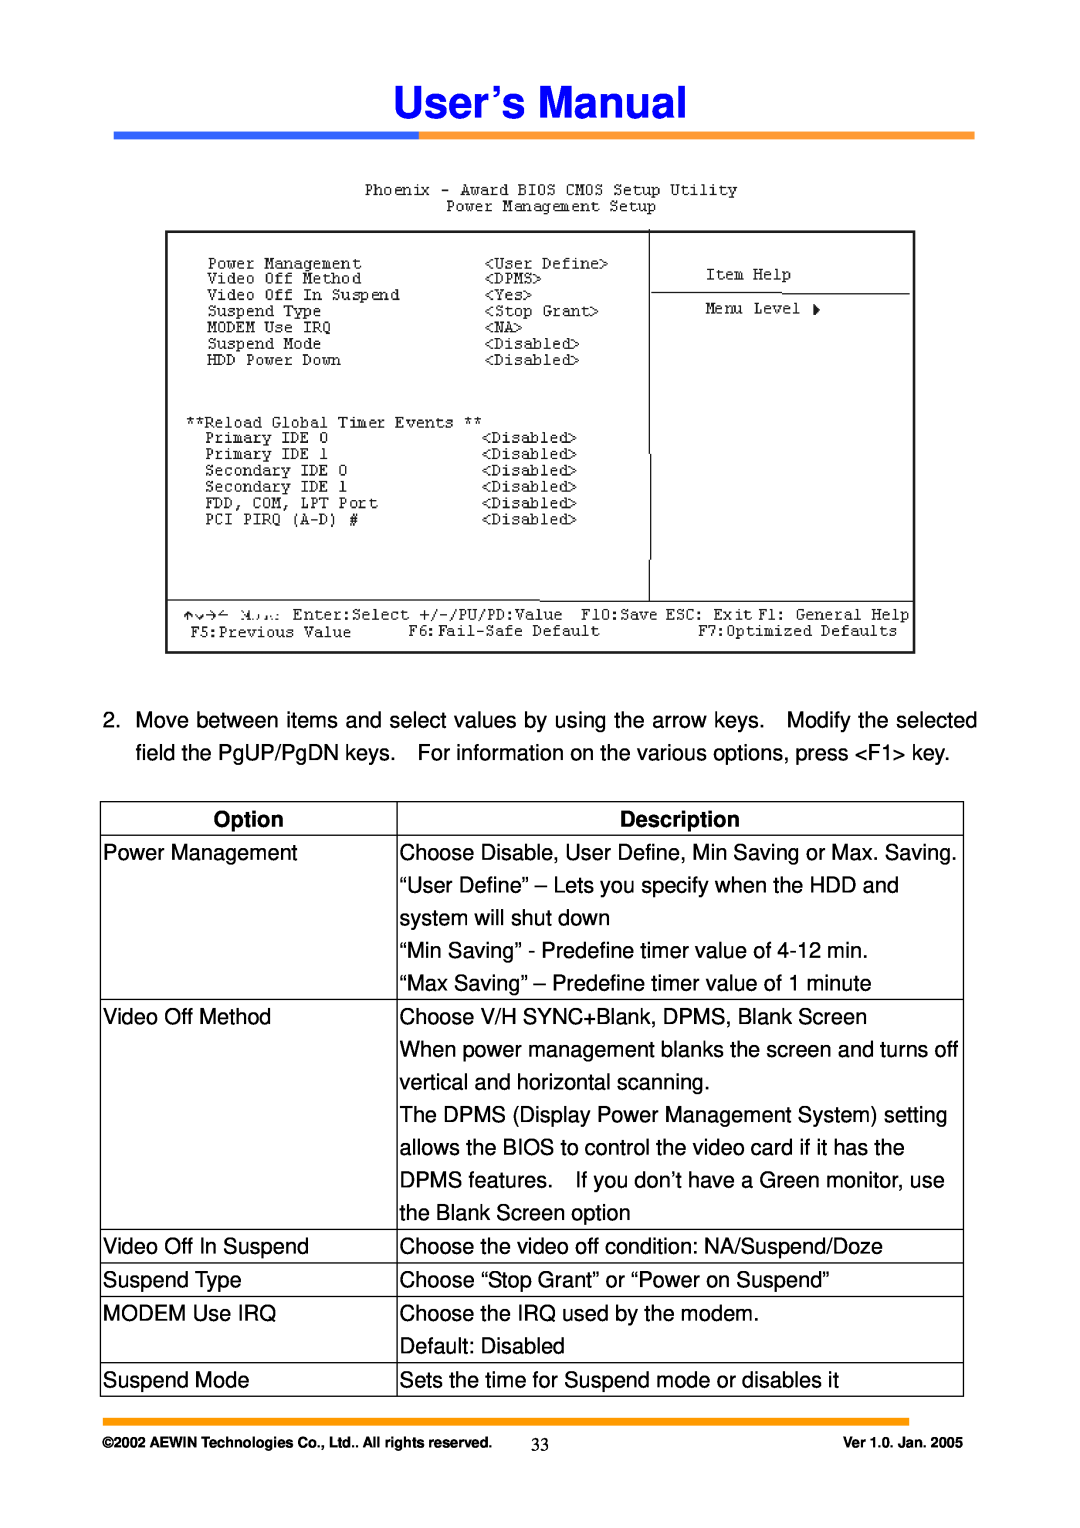 Intel AW-A795 user manual User’s Manual, Option, Description, Power Management 